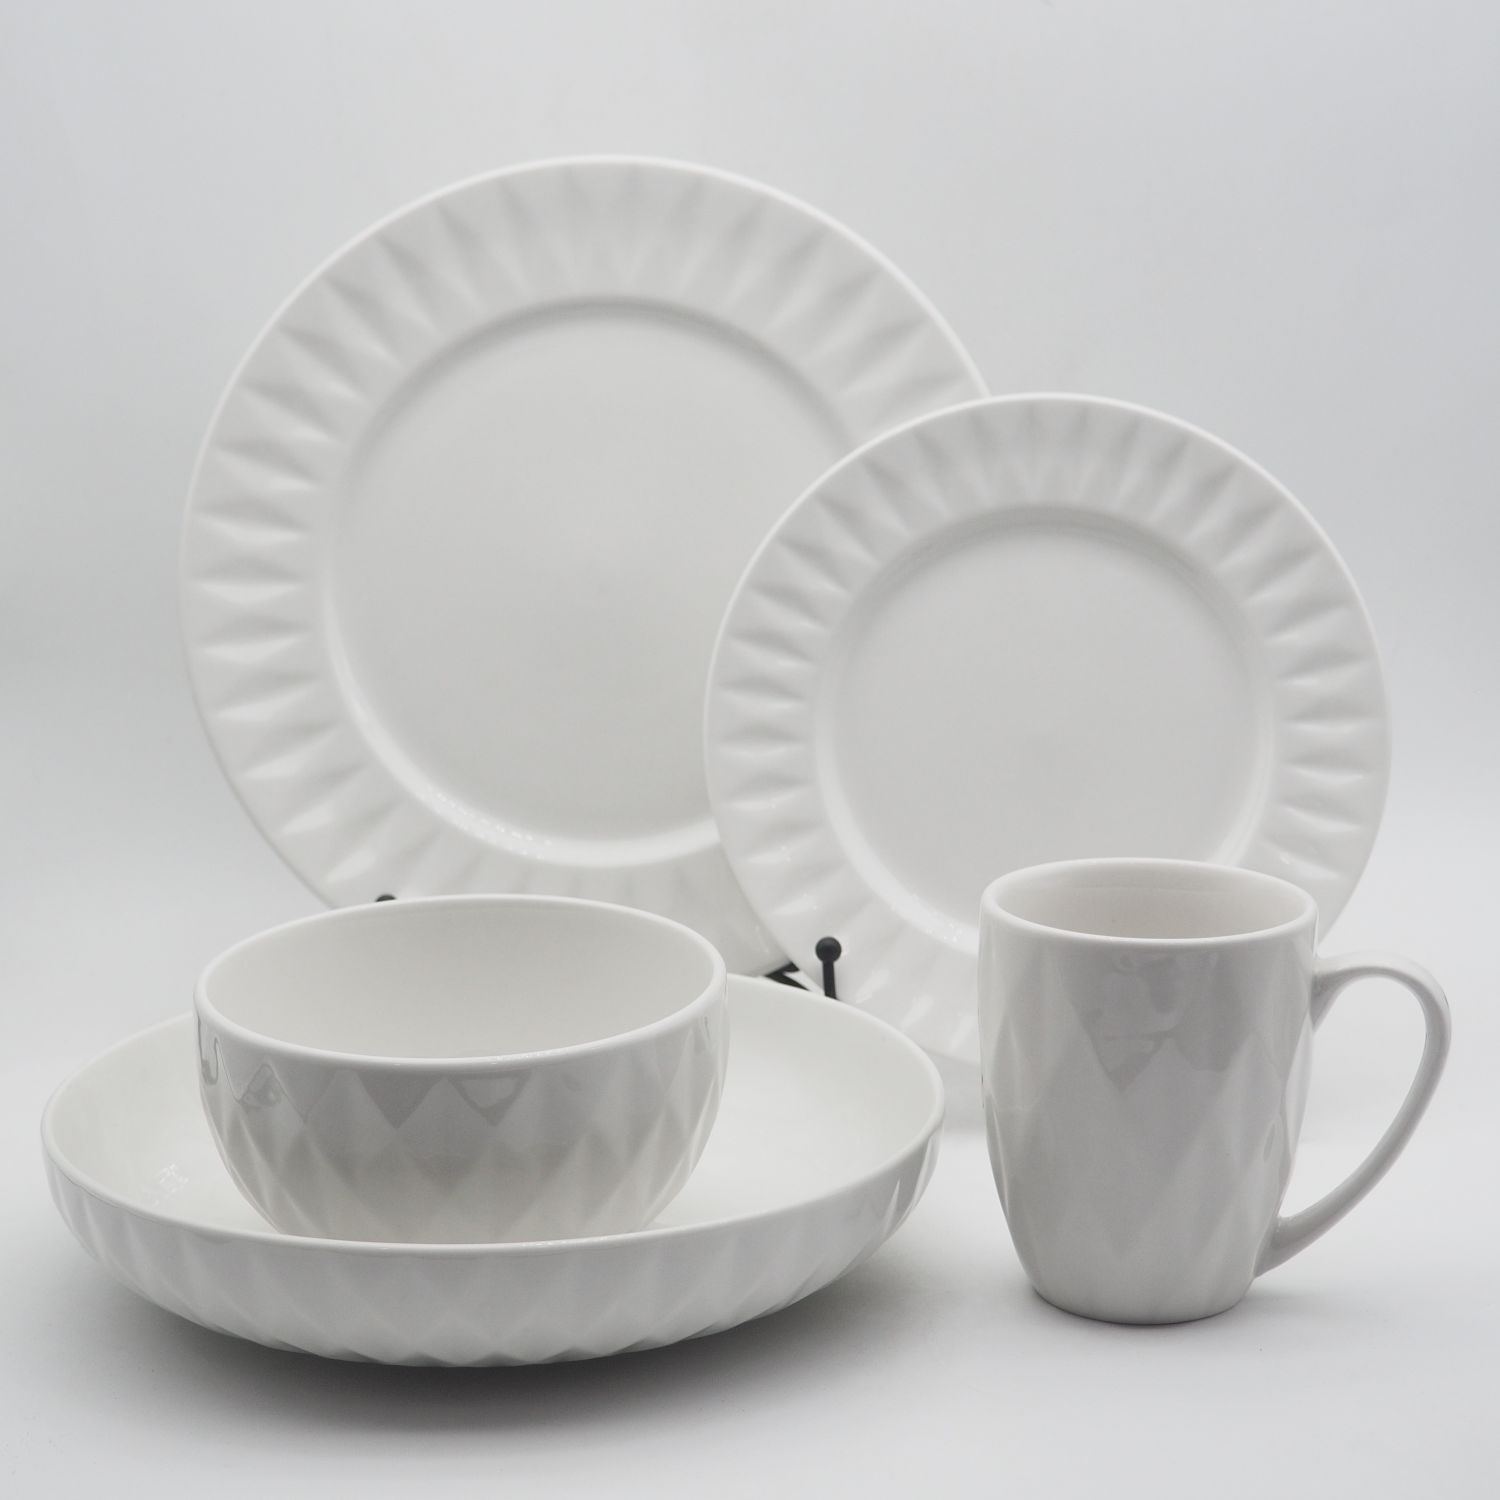 20pc porcelain dinnerset-134fp027